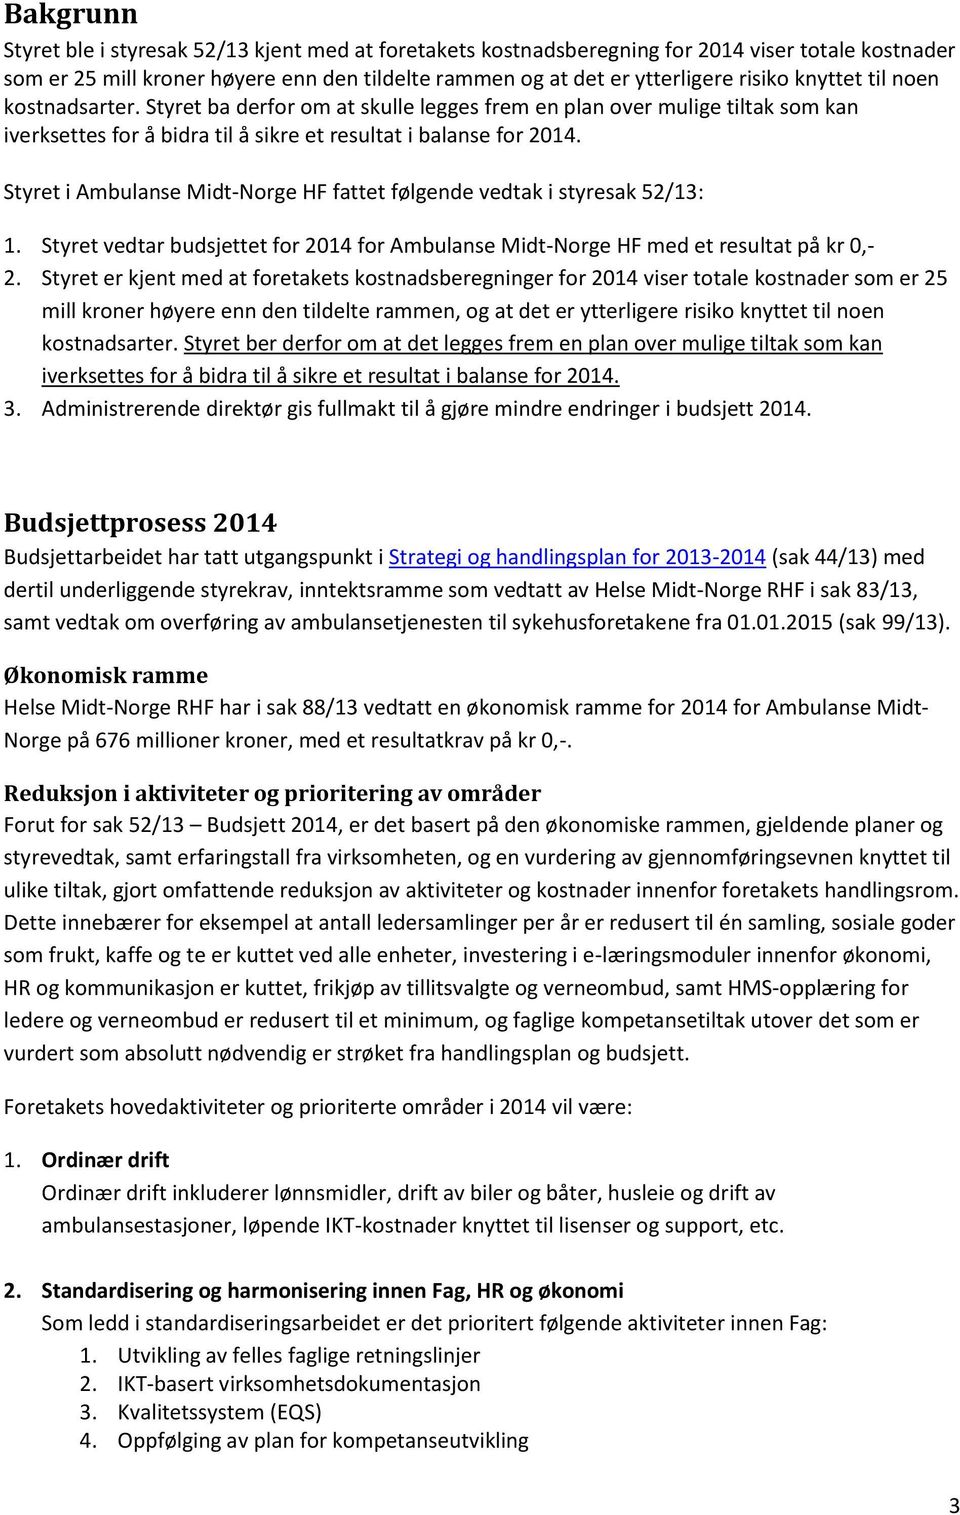 Styret i Ambulanse Midt-Norge HF fattet følgende vedtak i styresak 52/13: 1. Styret vedtar budsjettet for 2014 for Ambulanse Midt-Norge HF med et resultat på kr 0,- 2.